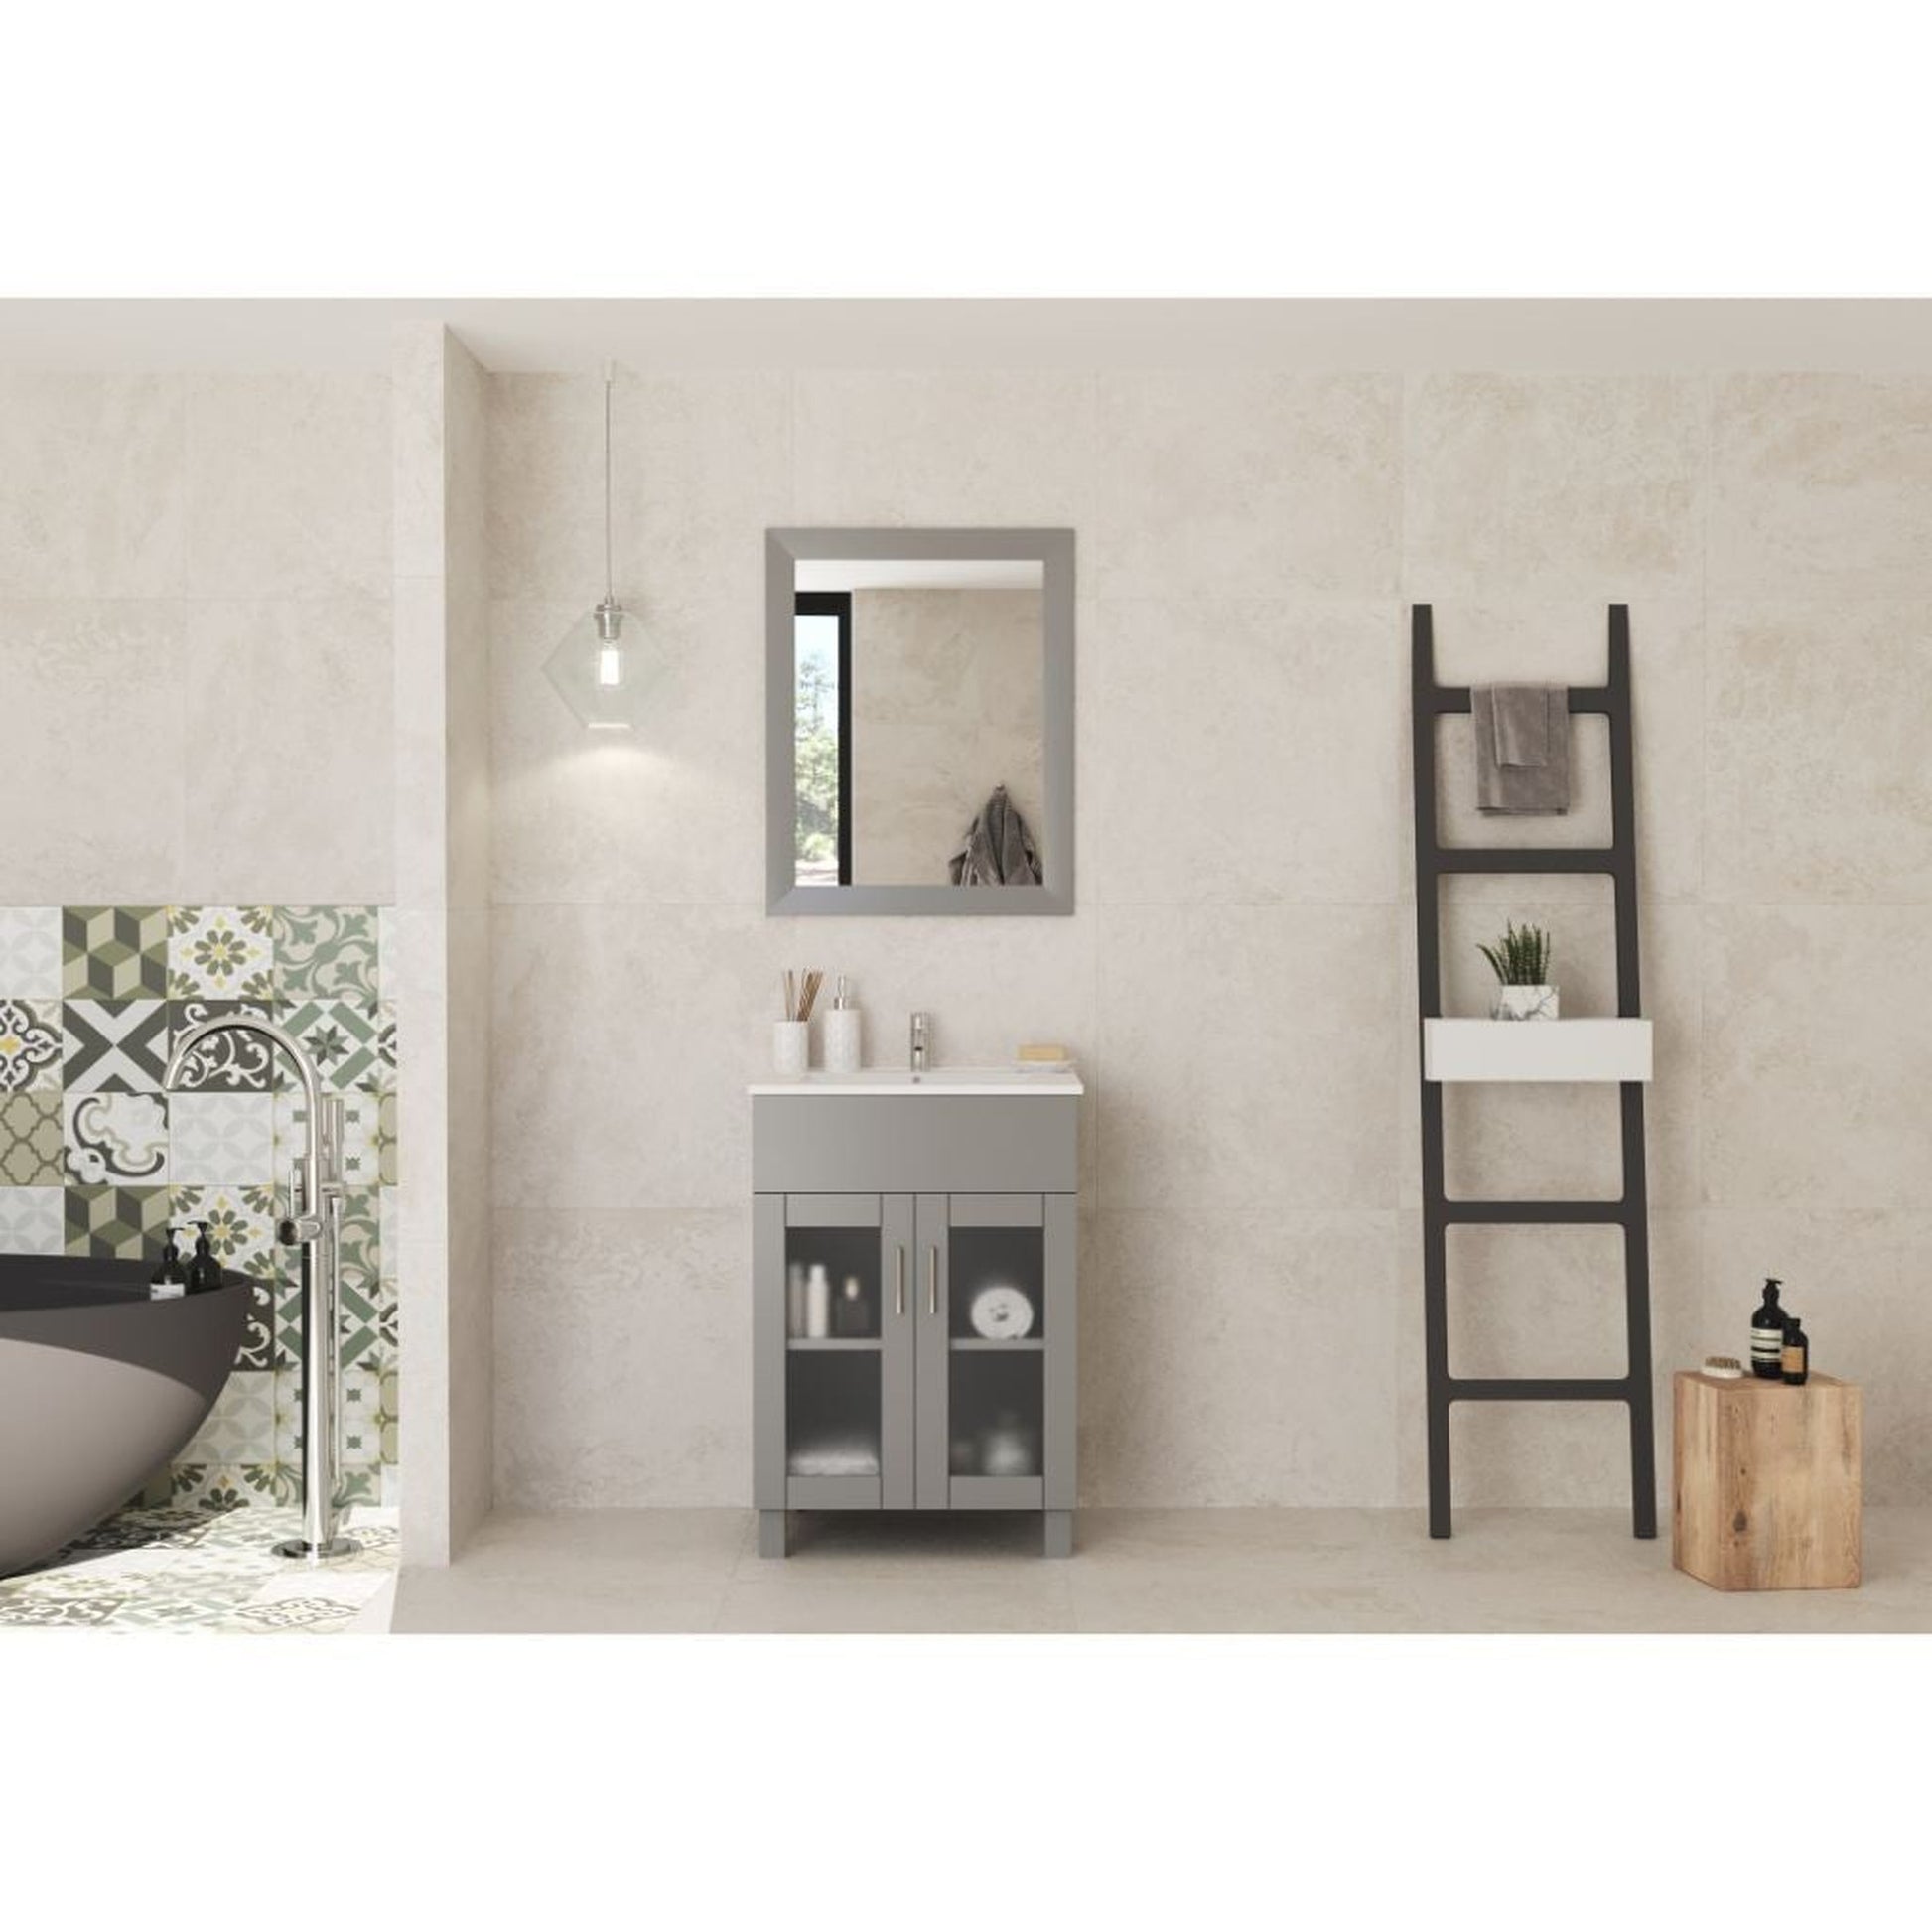 Laviva Nova 24" Gray Vanity Base and White Countertop With Ceramic Sink